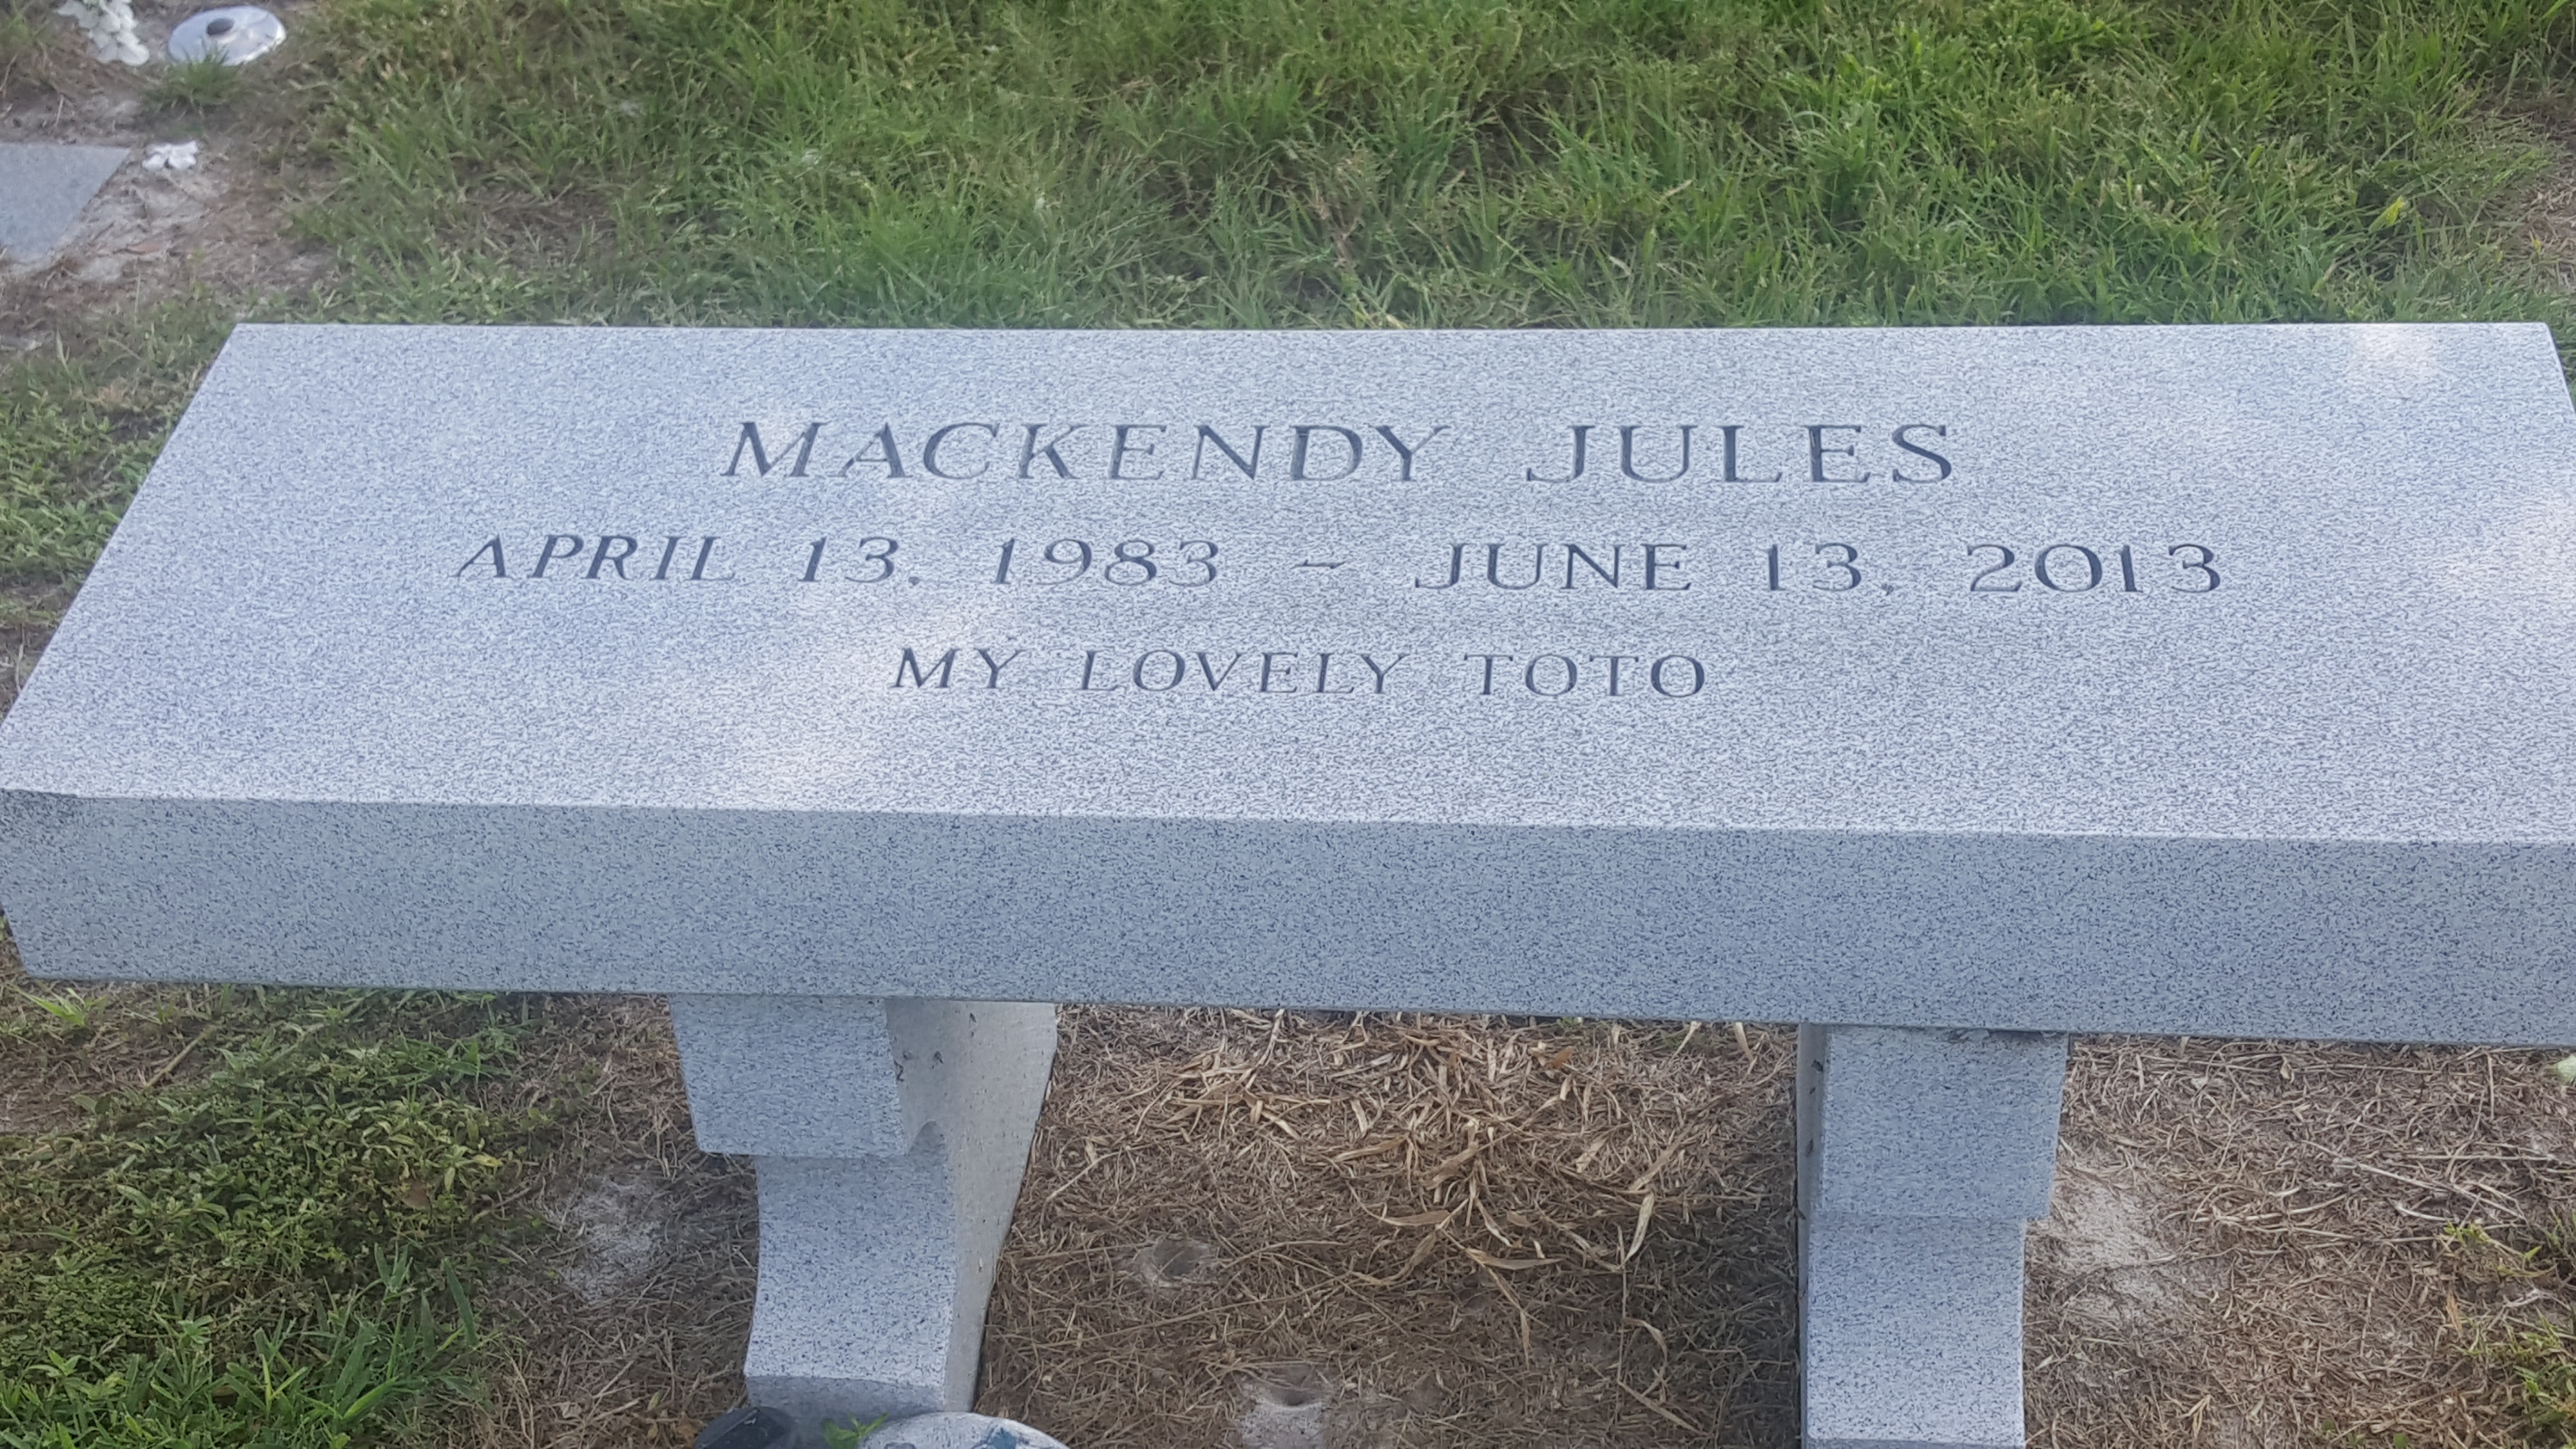 Mackendy Jules